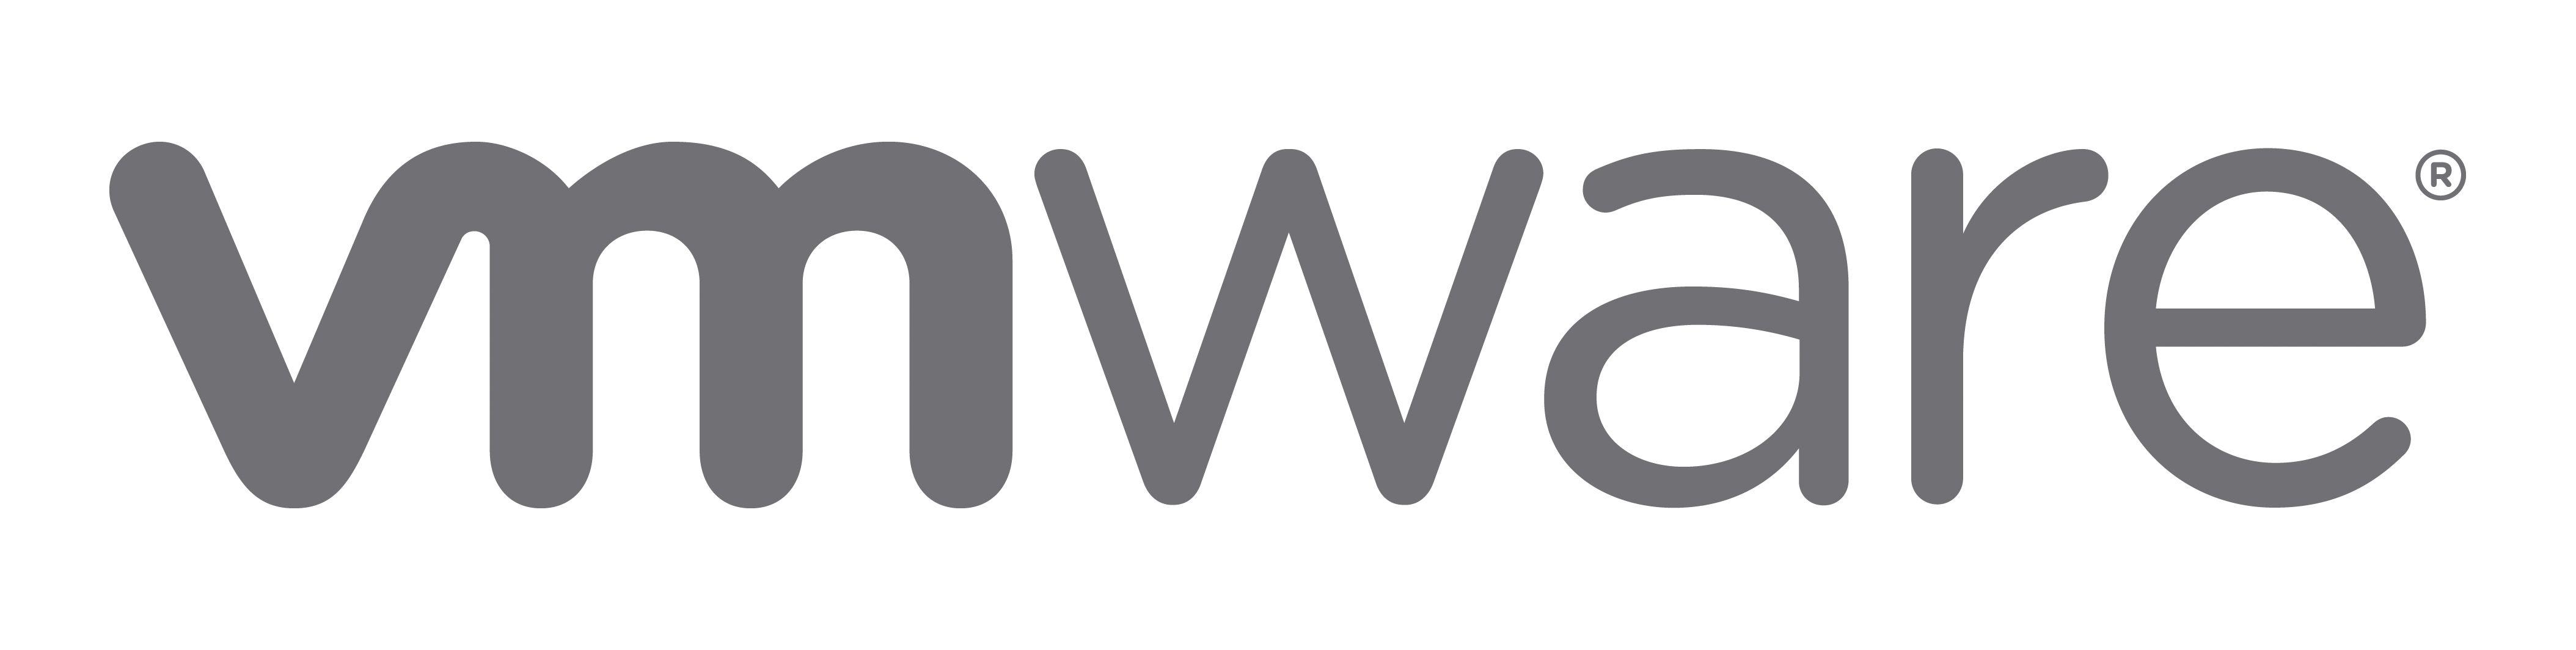 Vmware Inc Logo - VMware Inc. Down 19% On Low Guidance, Downgrades